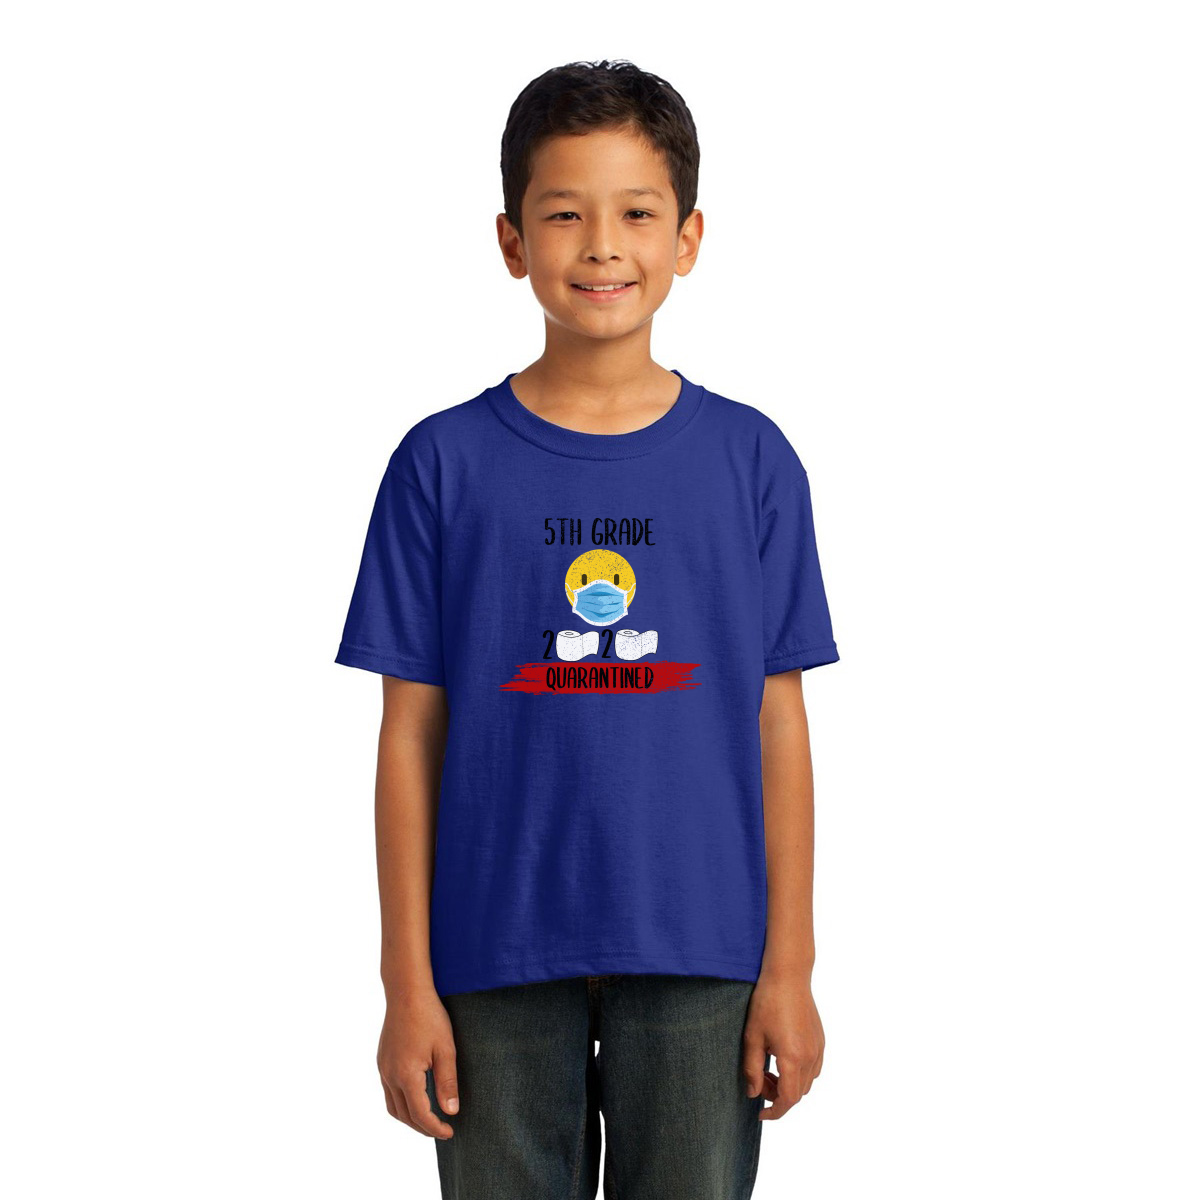 5th Grader Quarantined Kids T-shirt | Blue